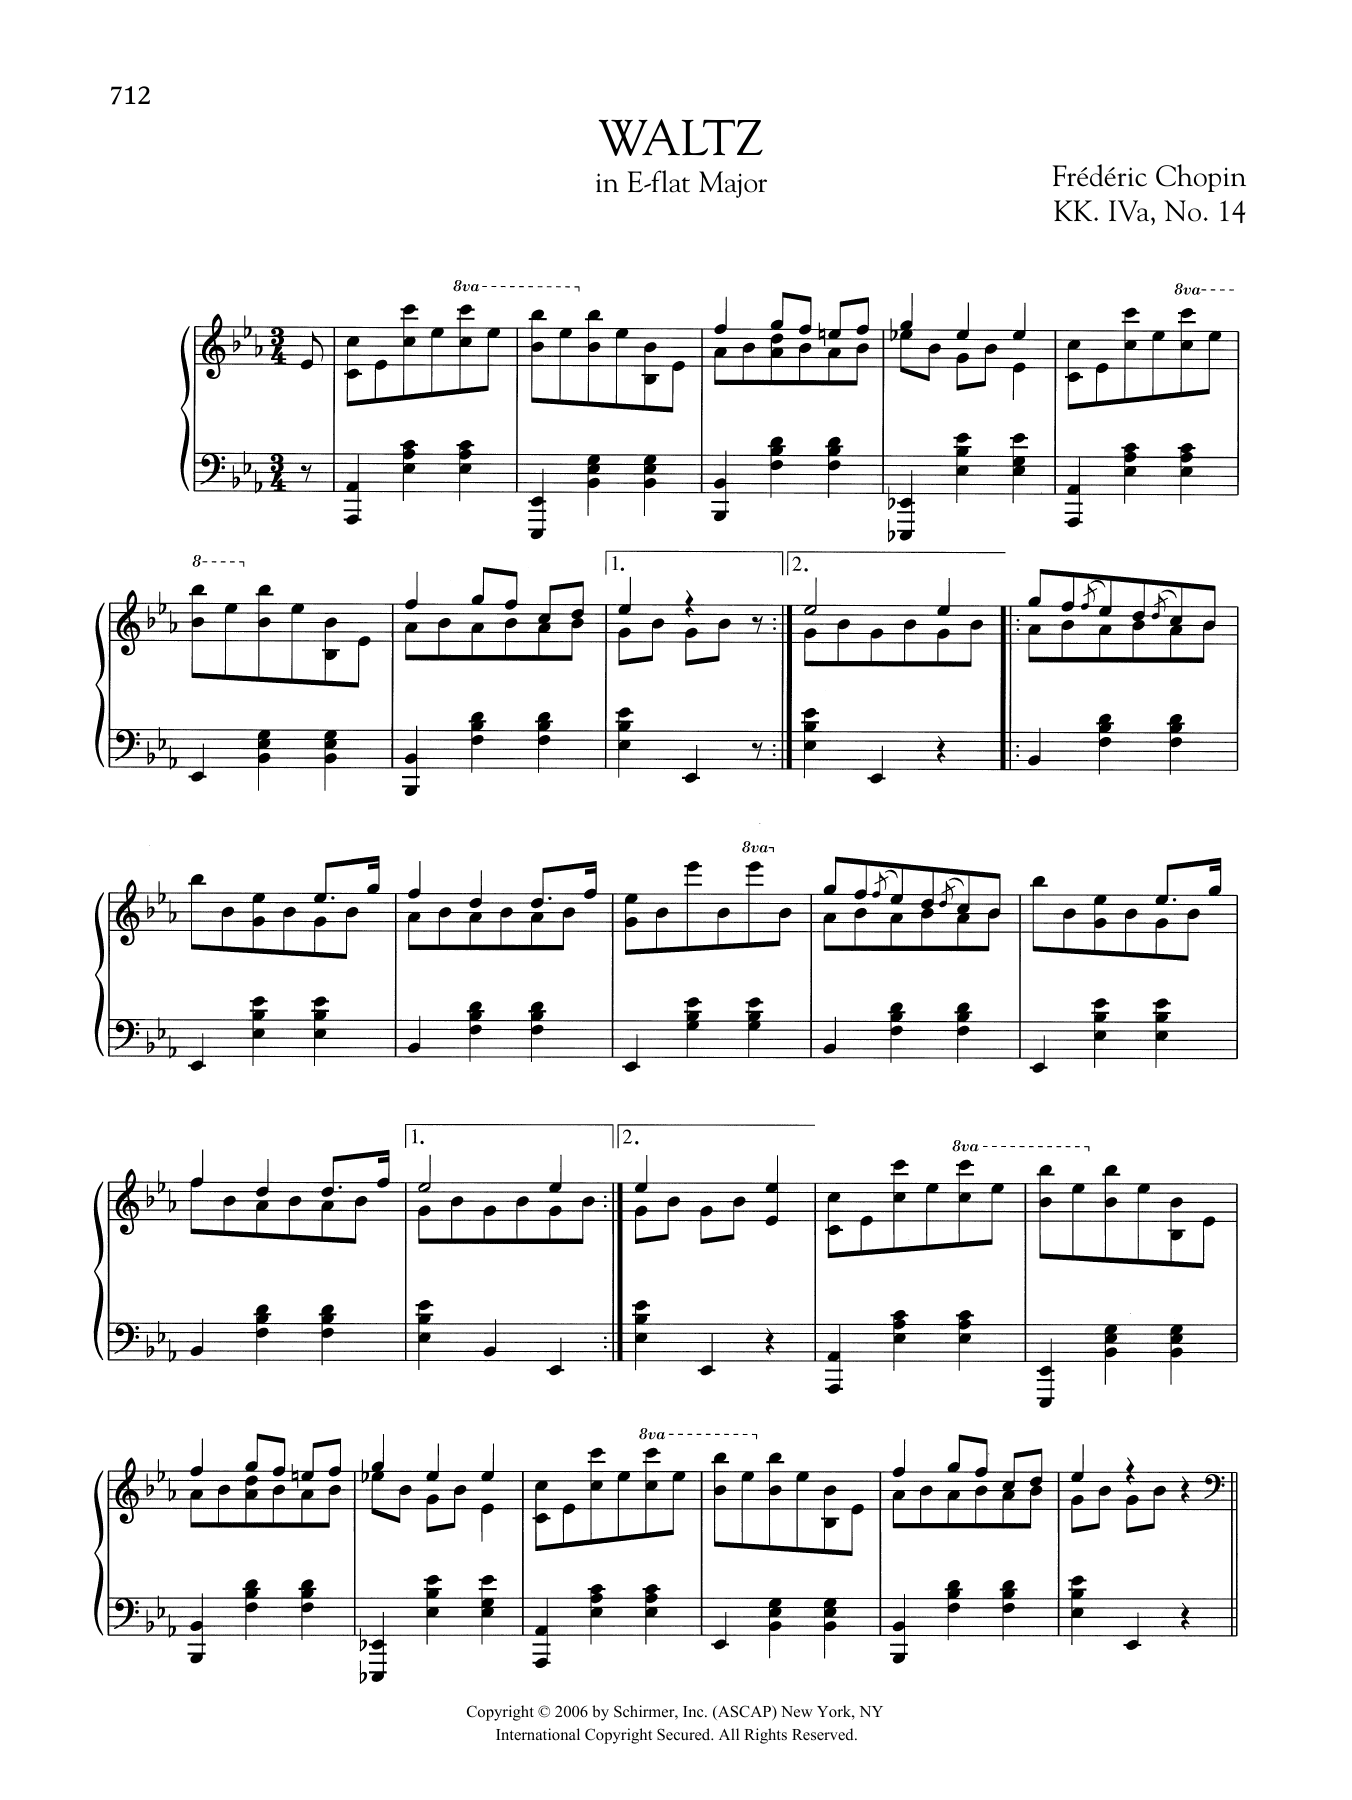 Download Frederic Chopin Waltz in E-flat Major, KK. IVa, No. 14 Sheet Music